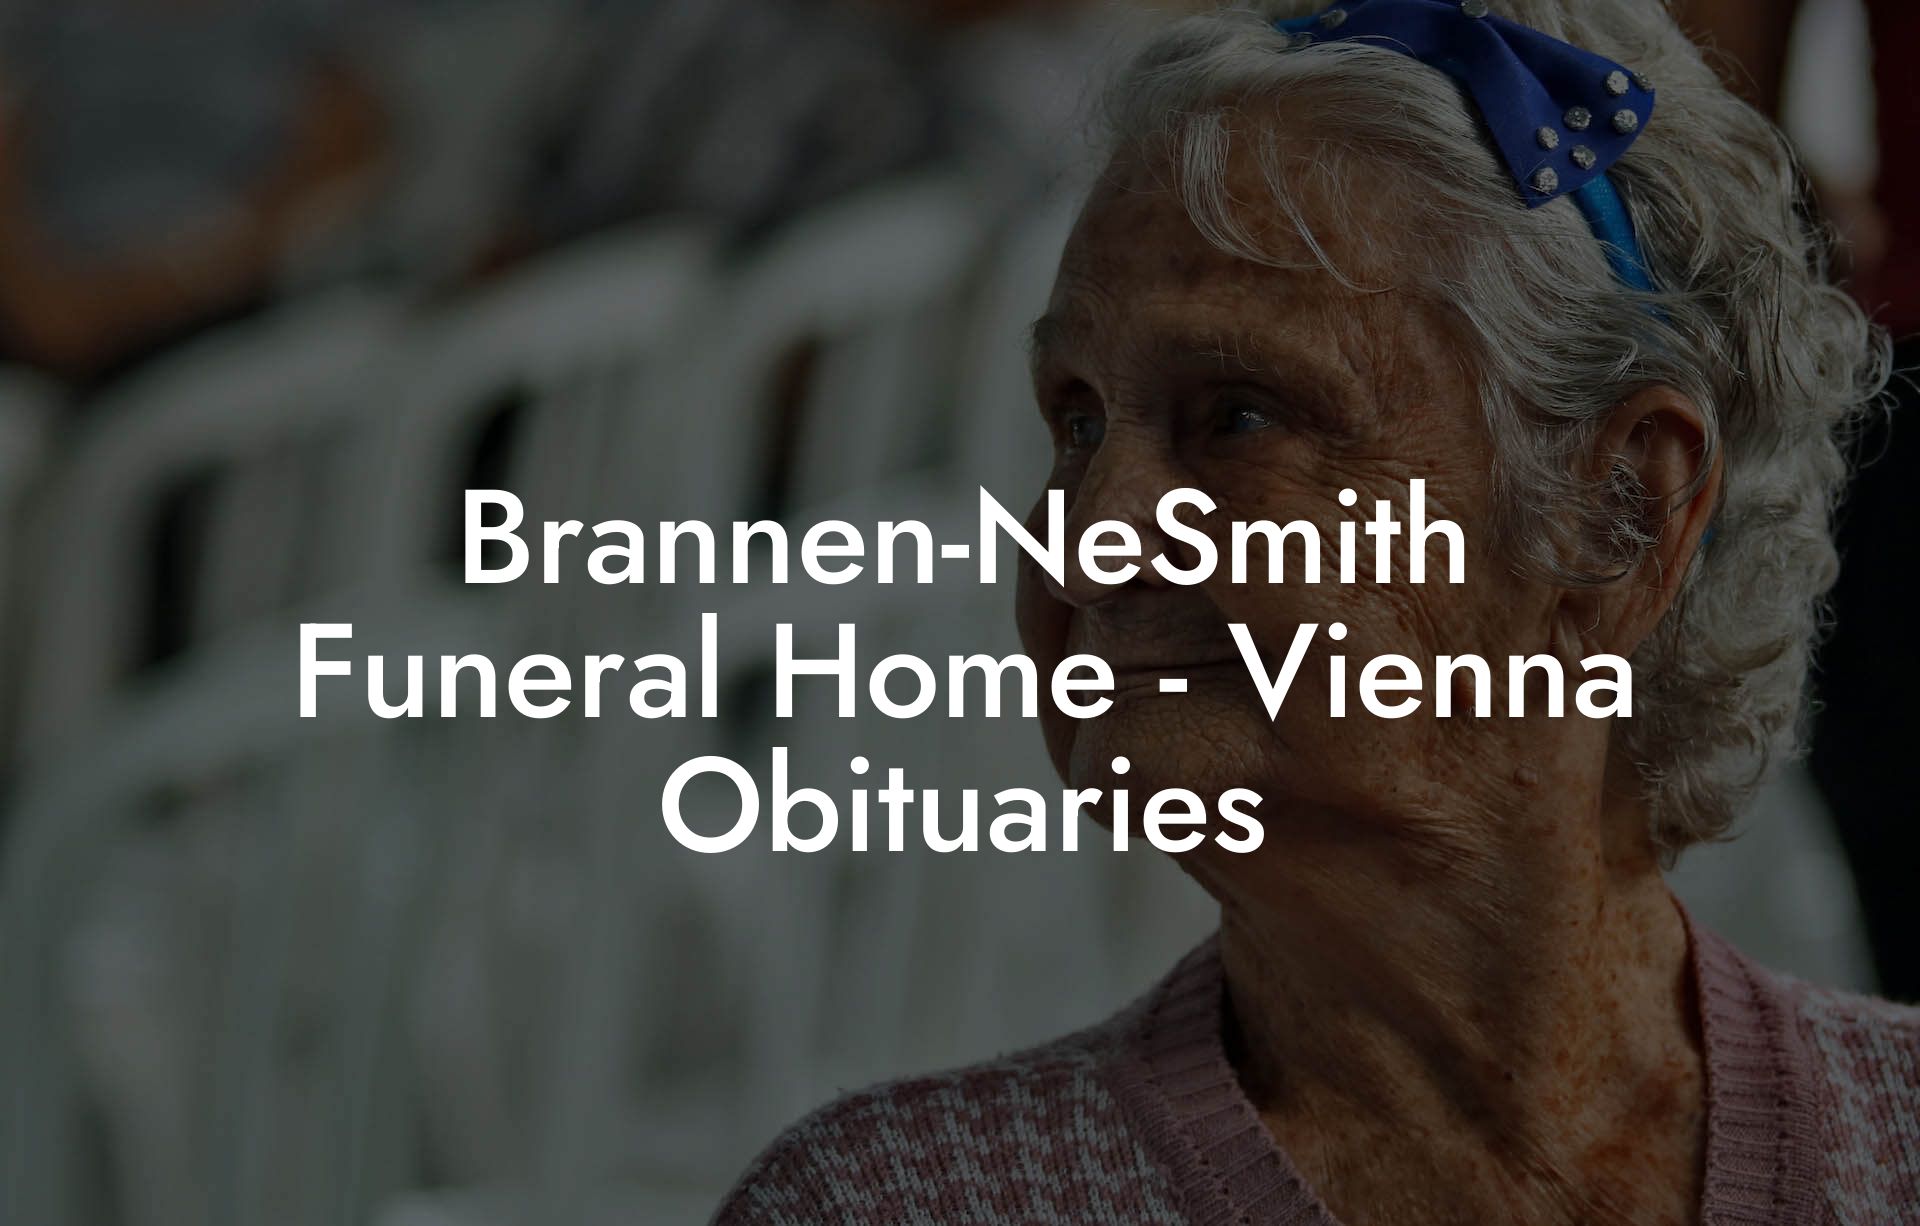 Brannen-NeSmith Funeral Home - Vienna Obituaries